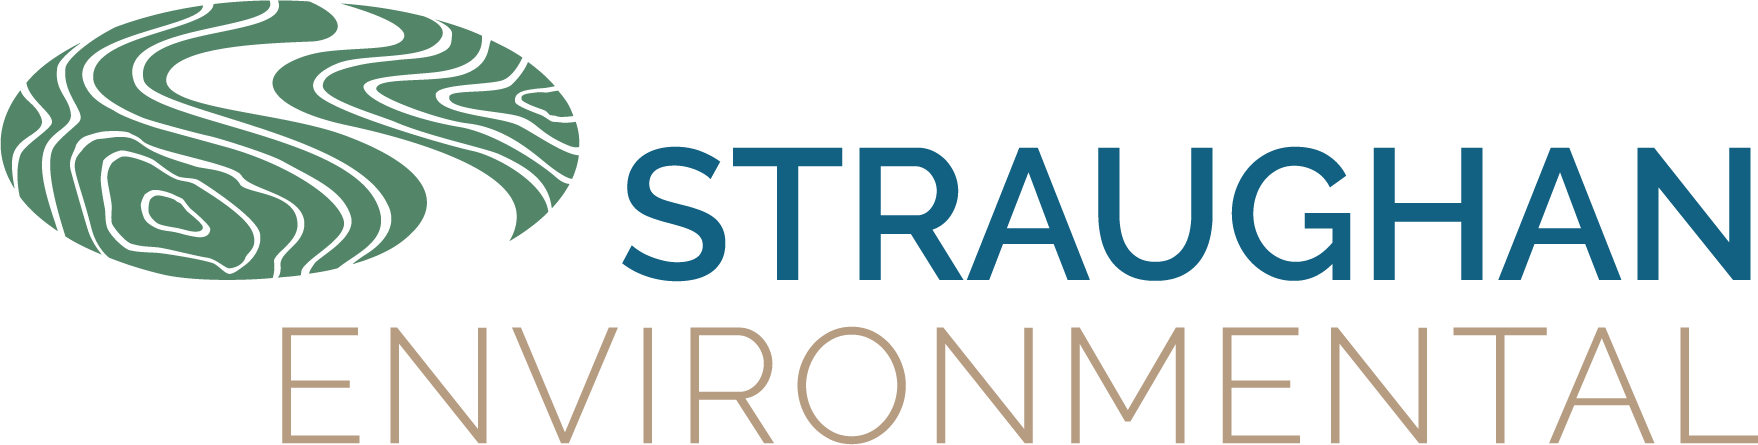 Straughan Environmental, Inc. Company Logo